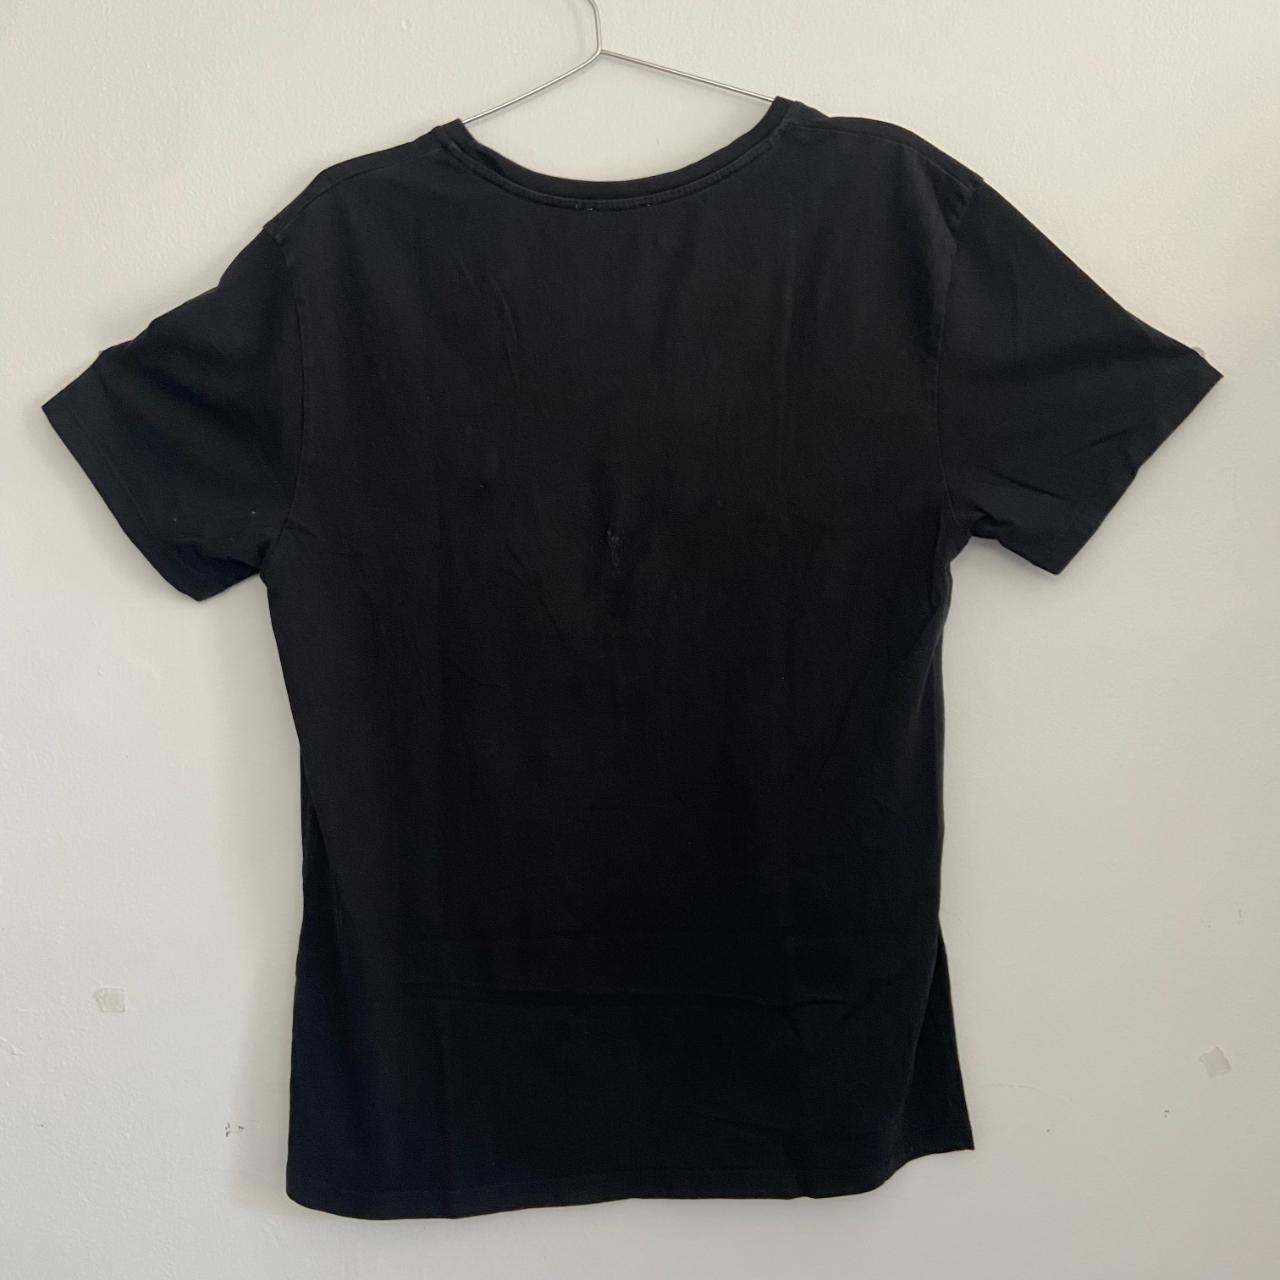 Product Image 3 - 📌 Maison Kitsune Electric T-Shirt
📌